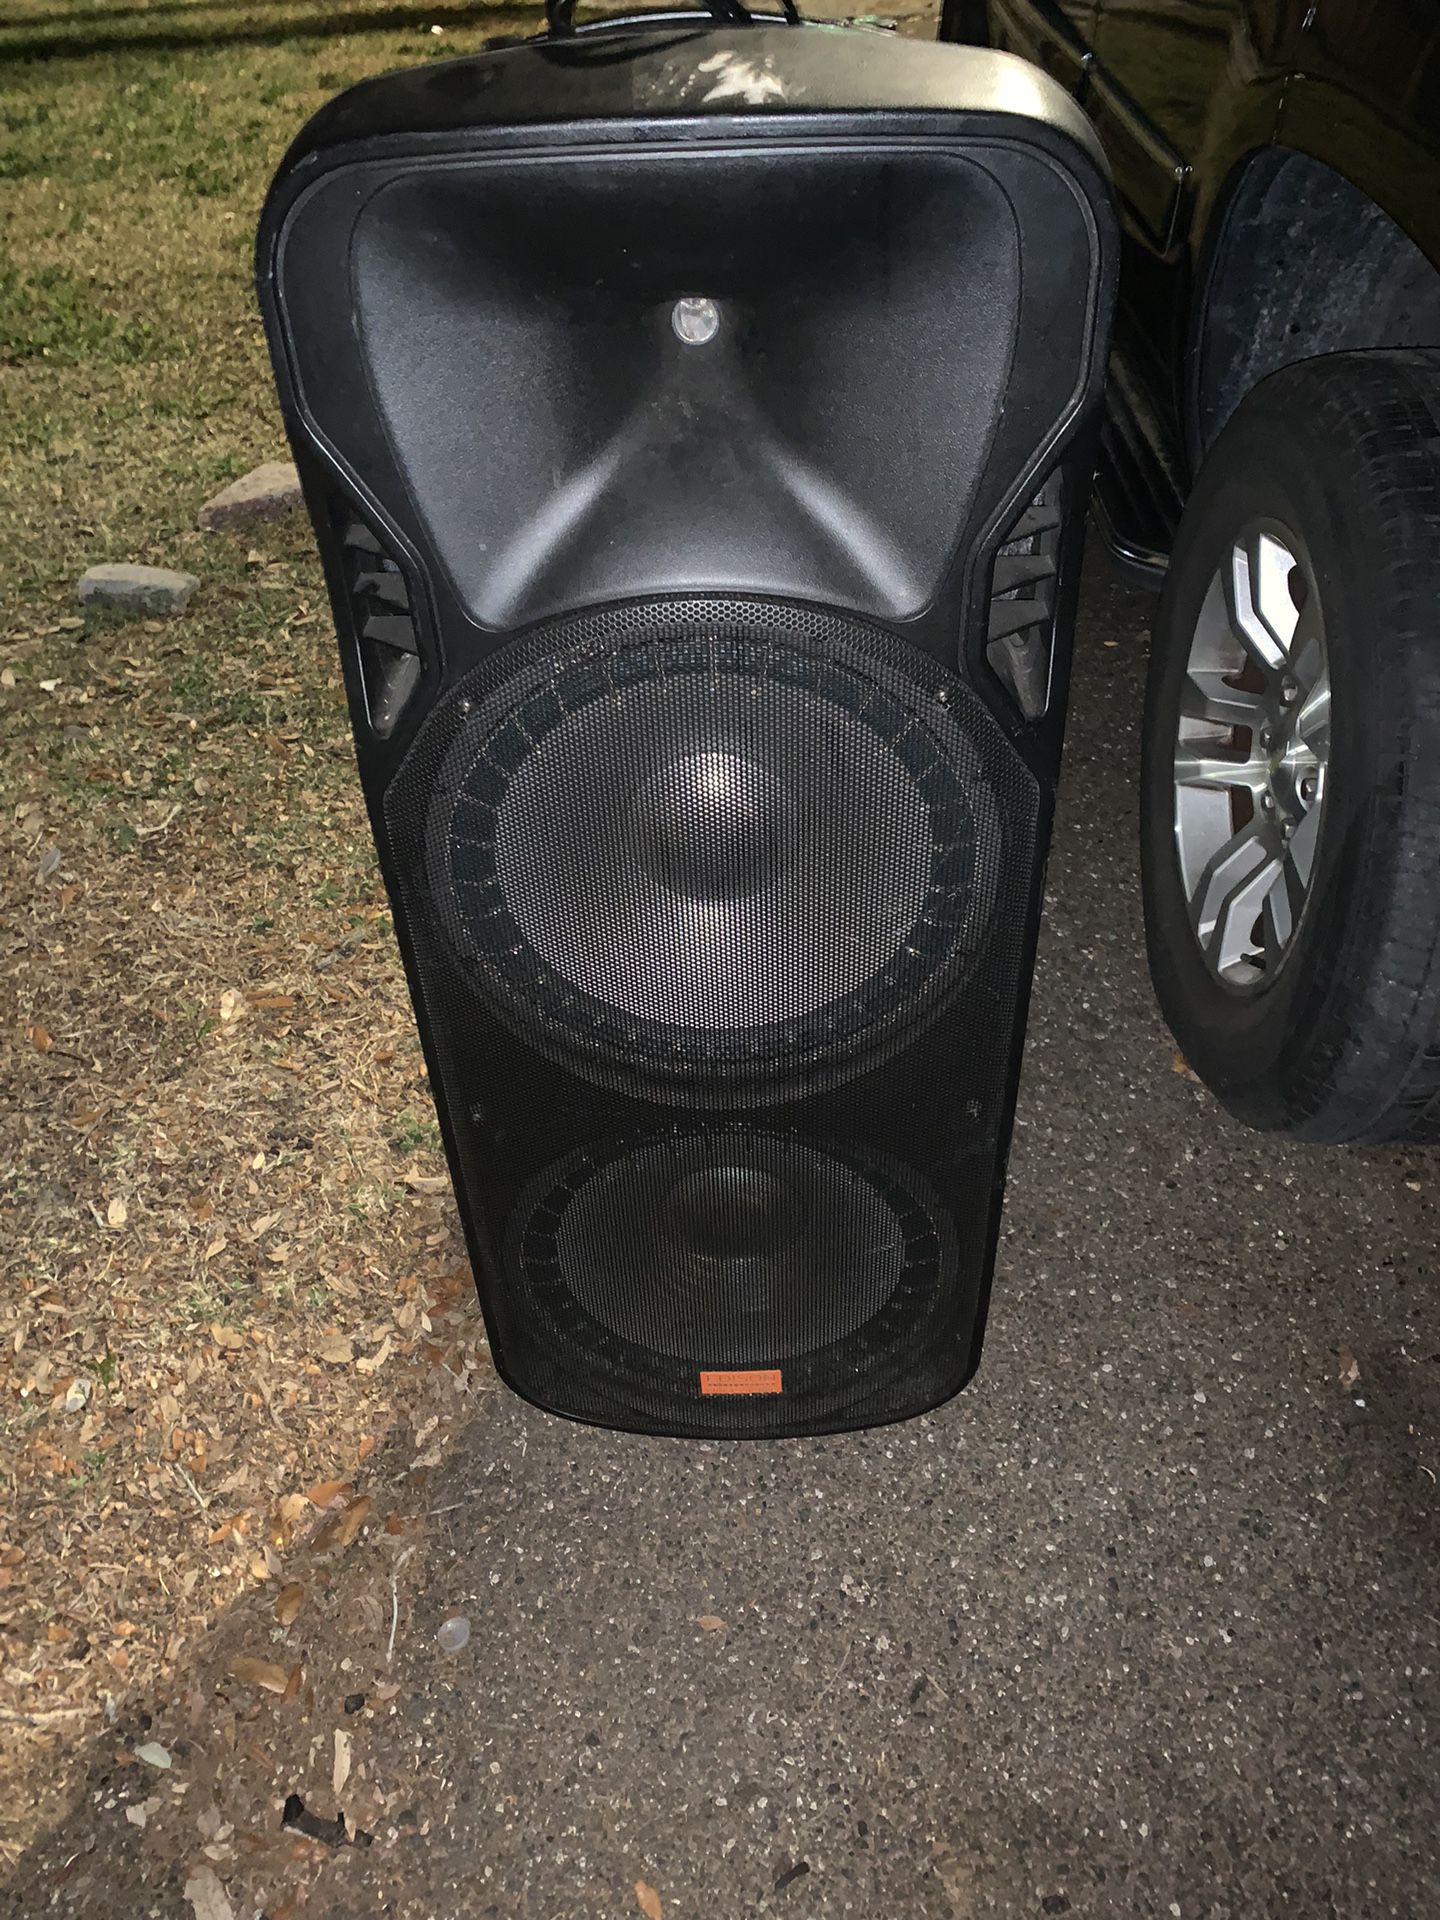 Edison Professional Bluetooth Speaker 100$obo